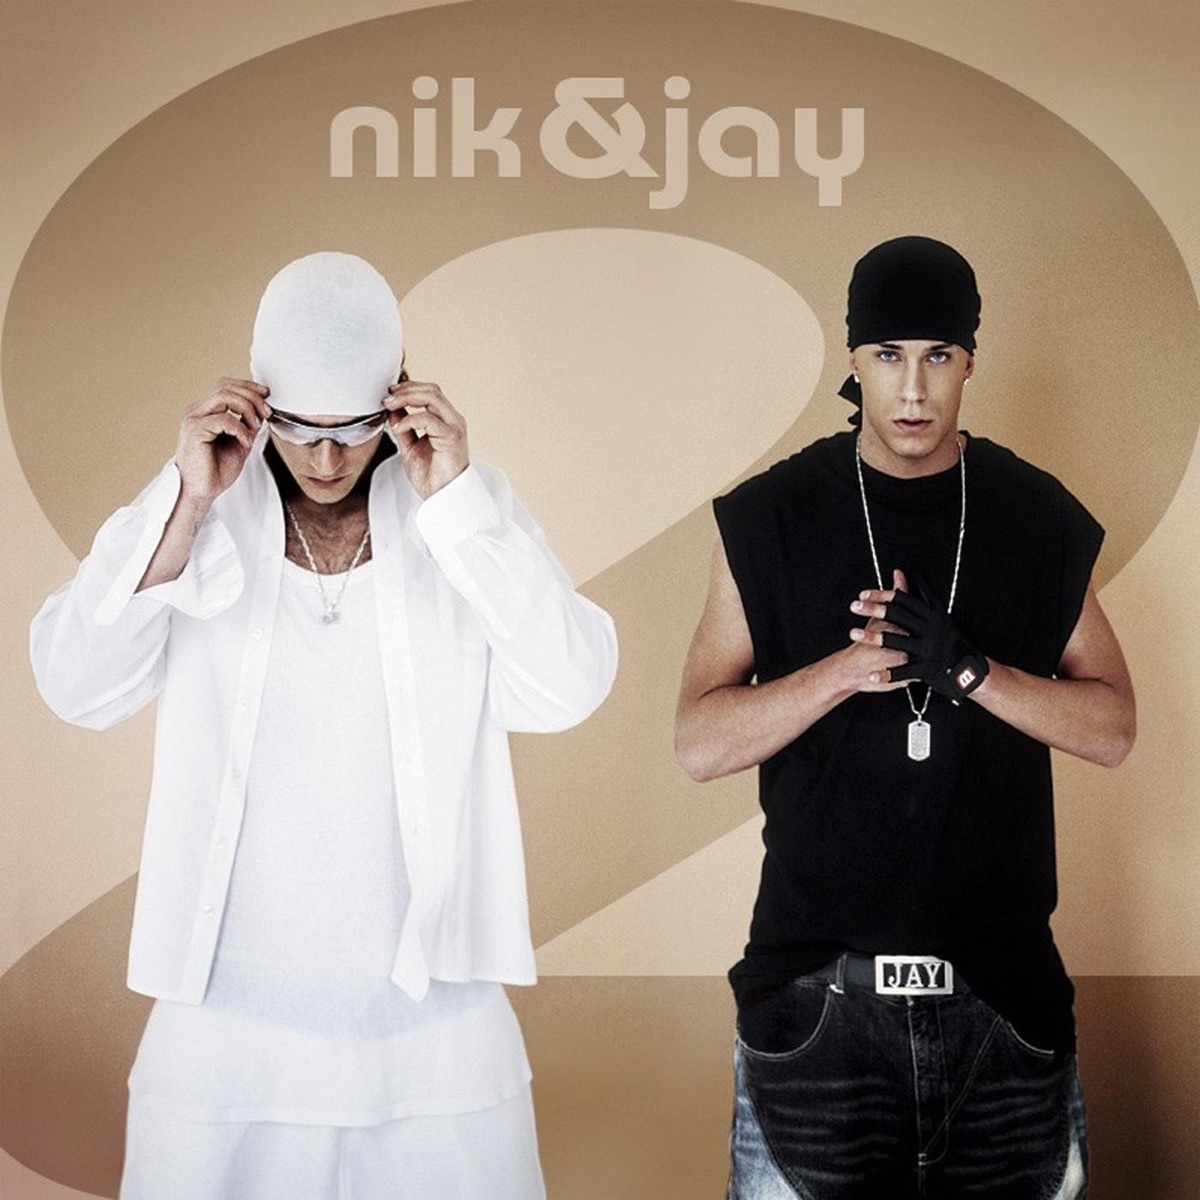 ‎Nik & Jay 2 by Nik Jay on Apple Music